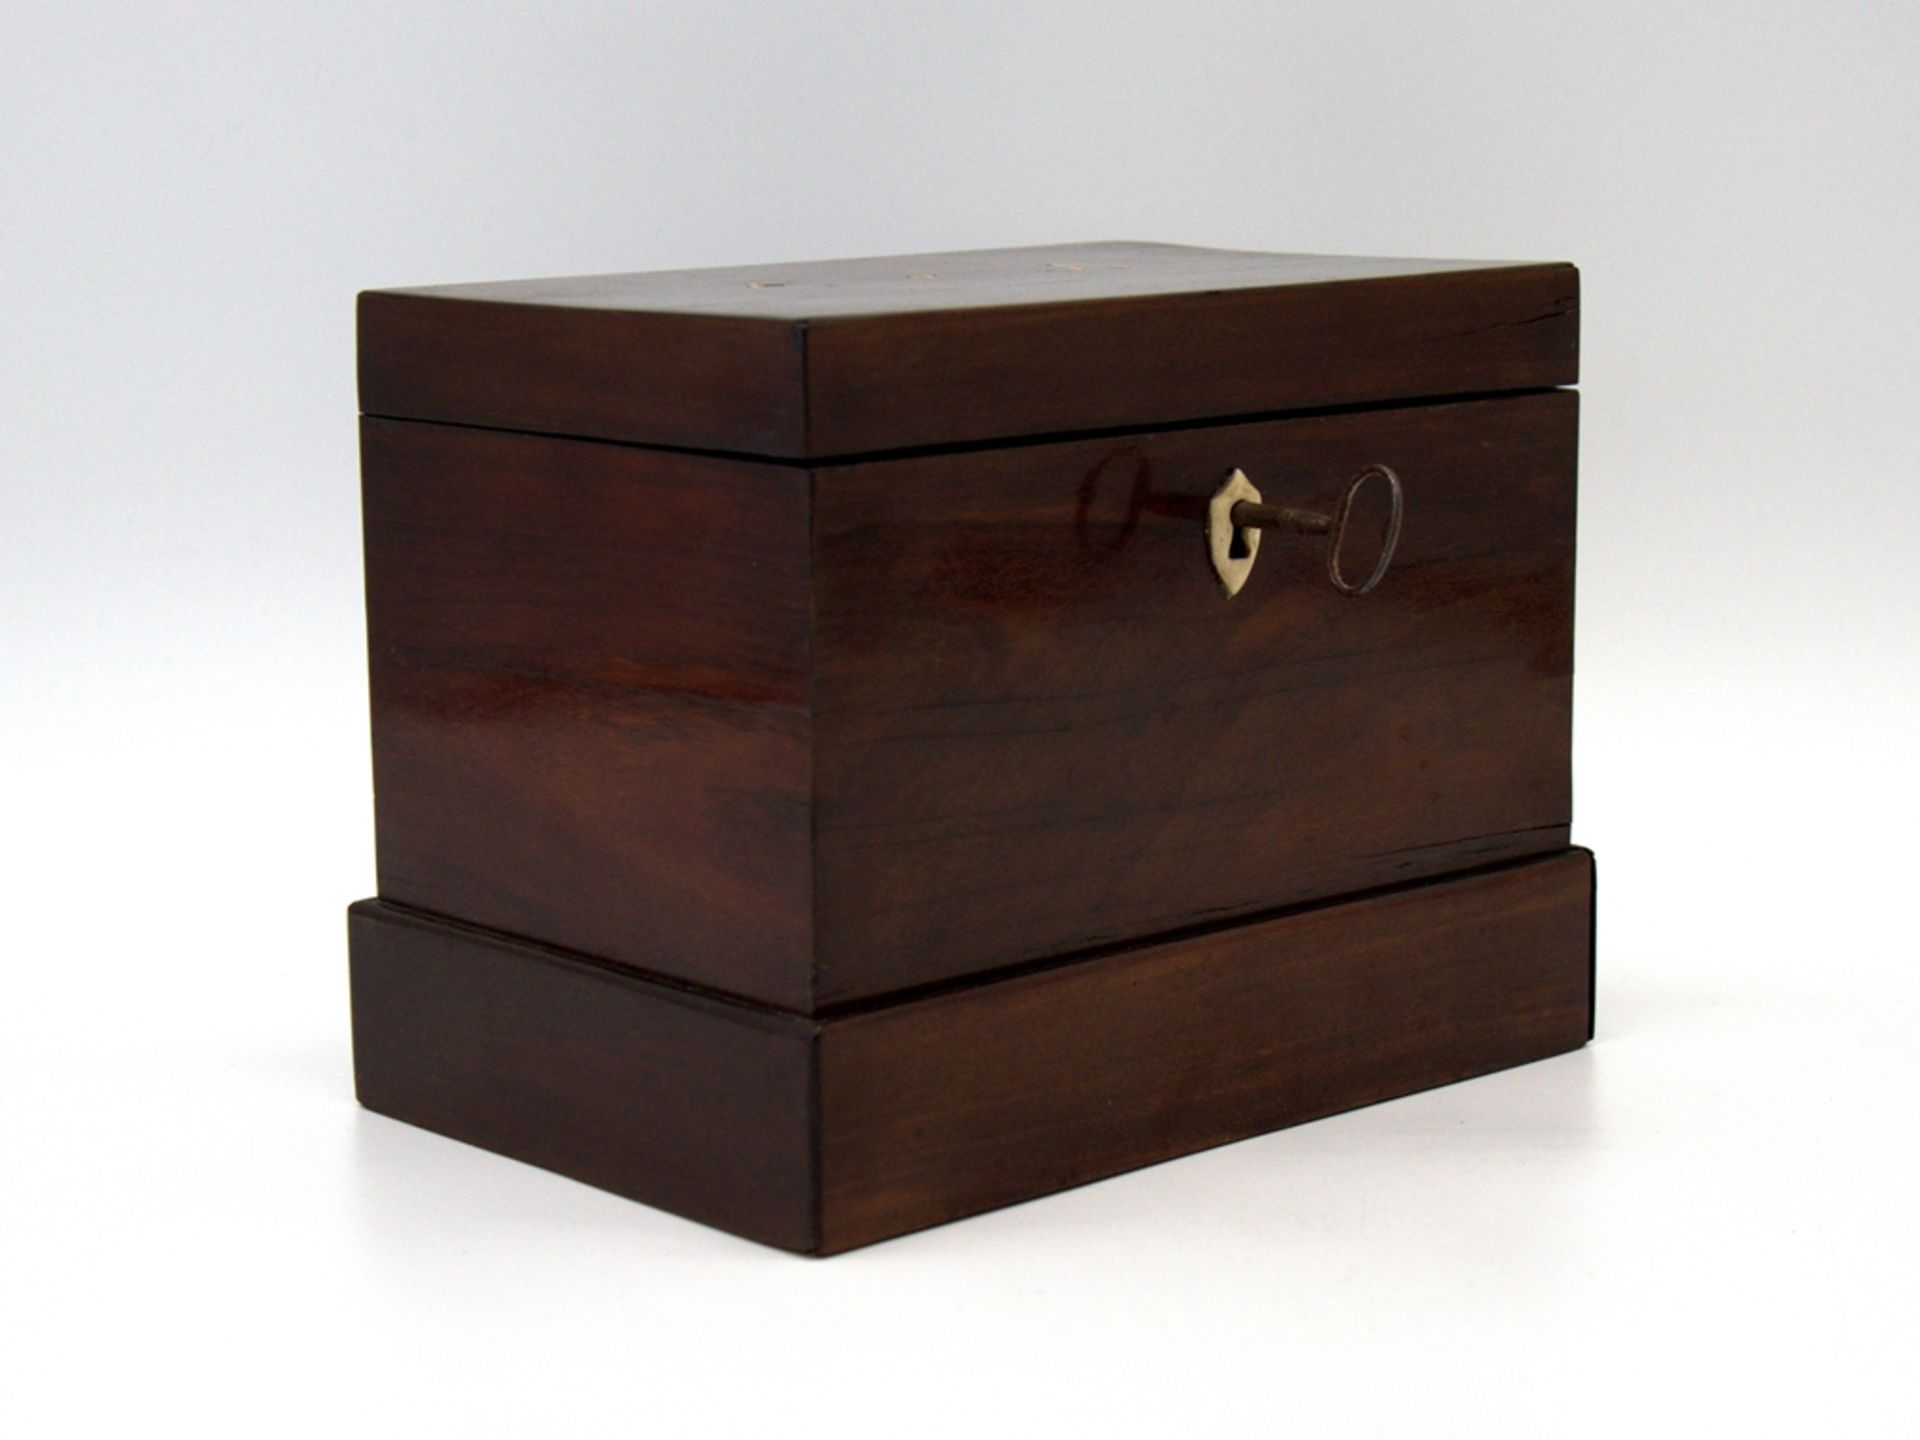 Elegant Biedermeier box, walnut veneer, with secret compartment, c. 1820